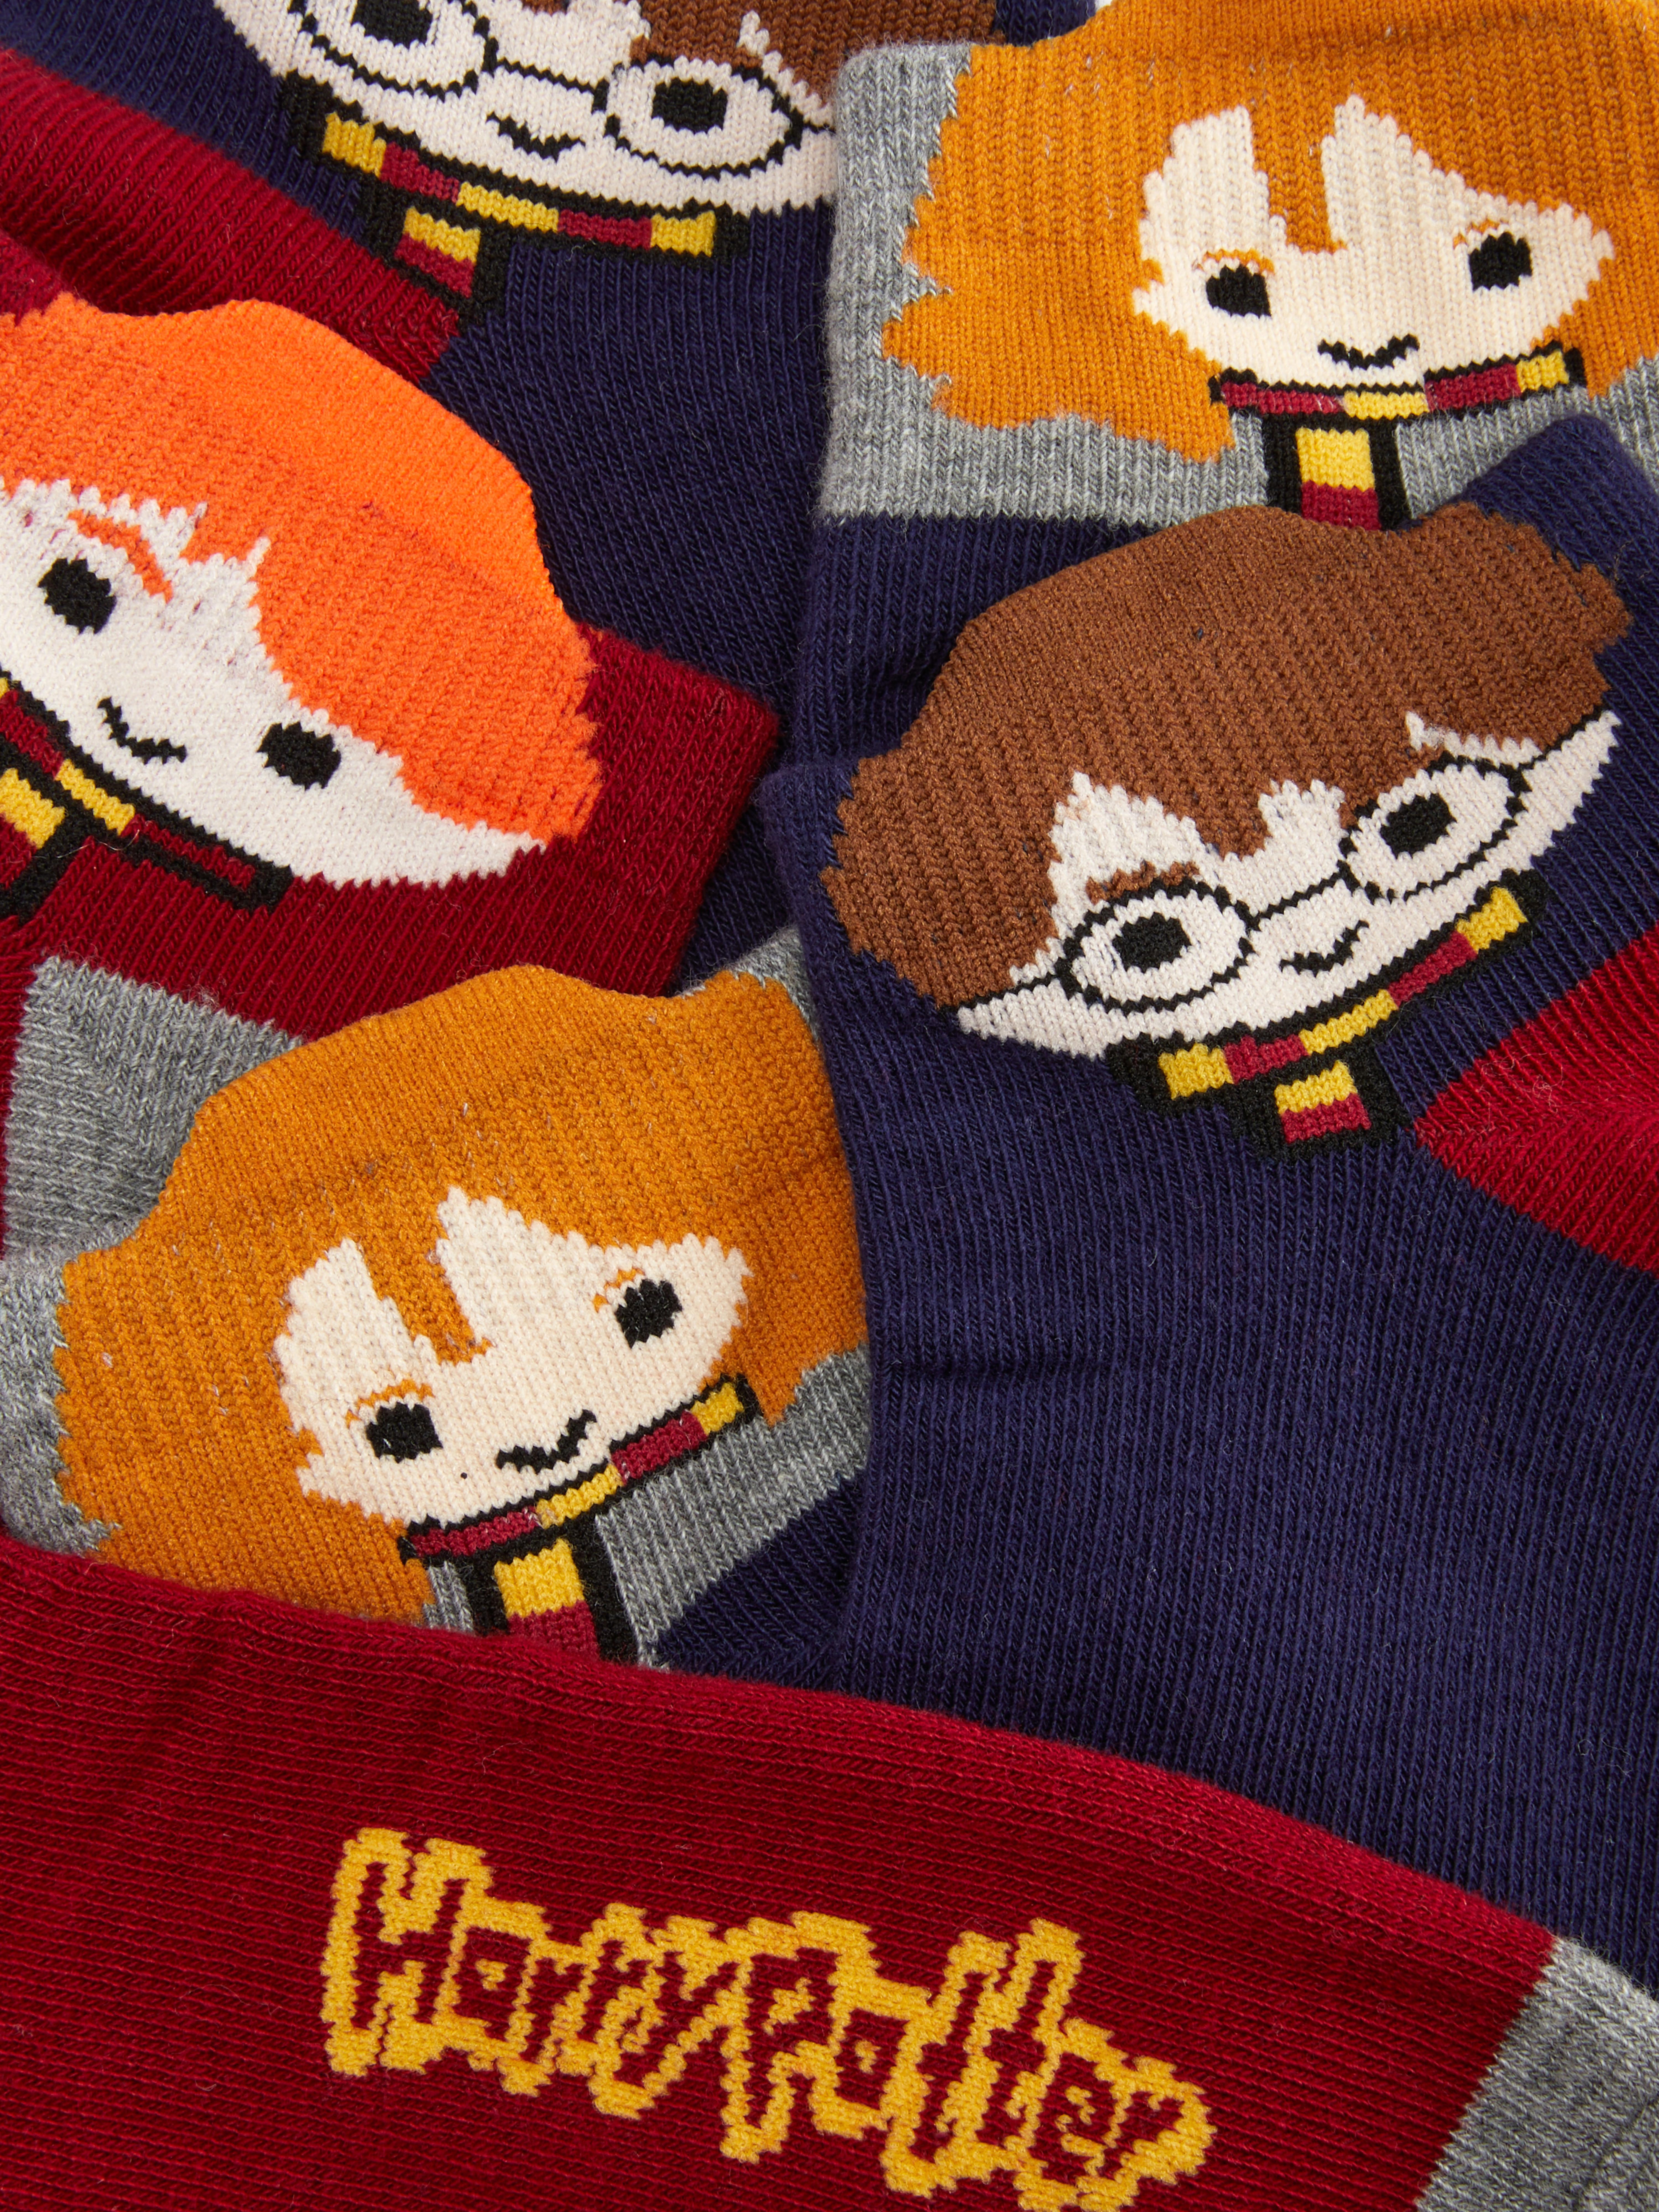 Pack 6 calcetines algodón Harry Potter, Calcetines de mujer